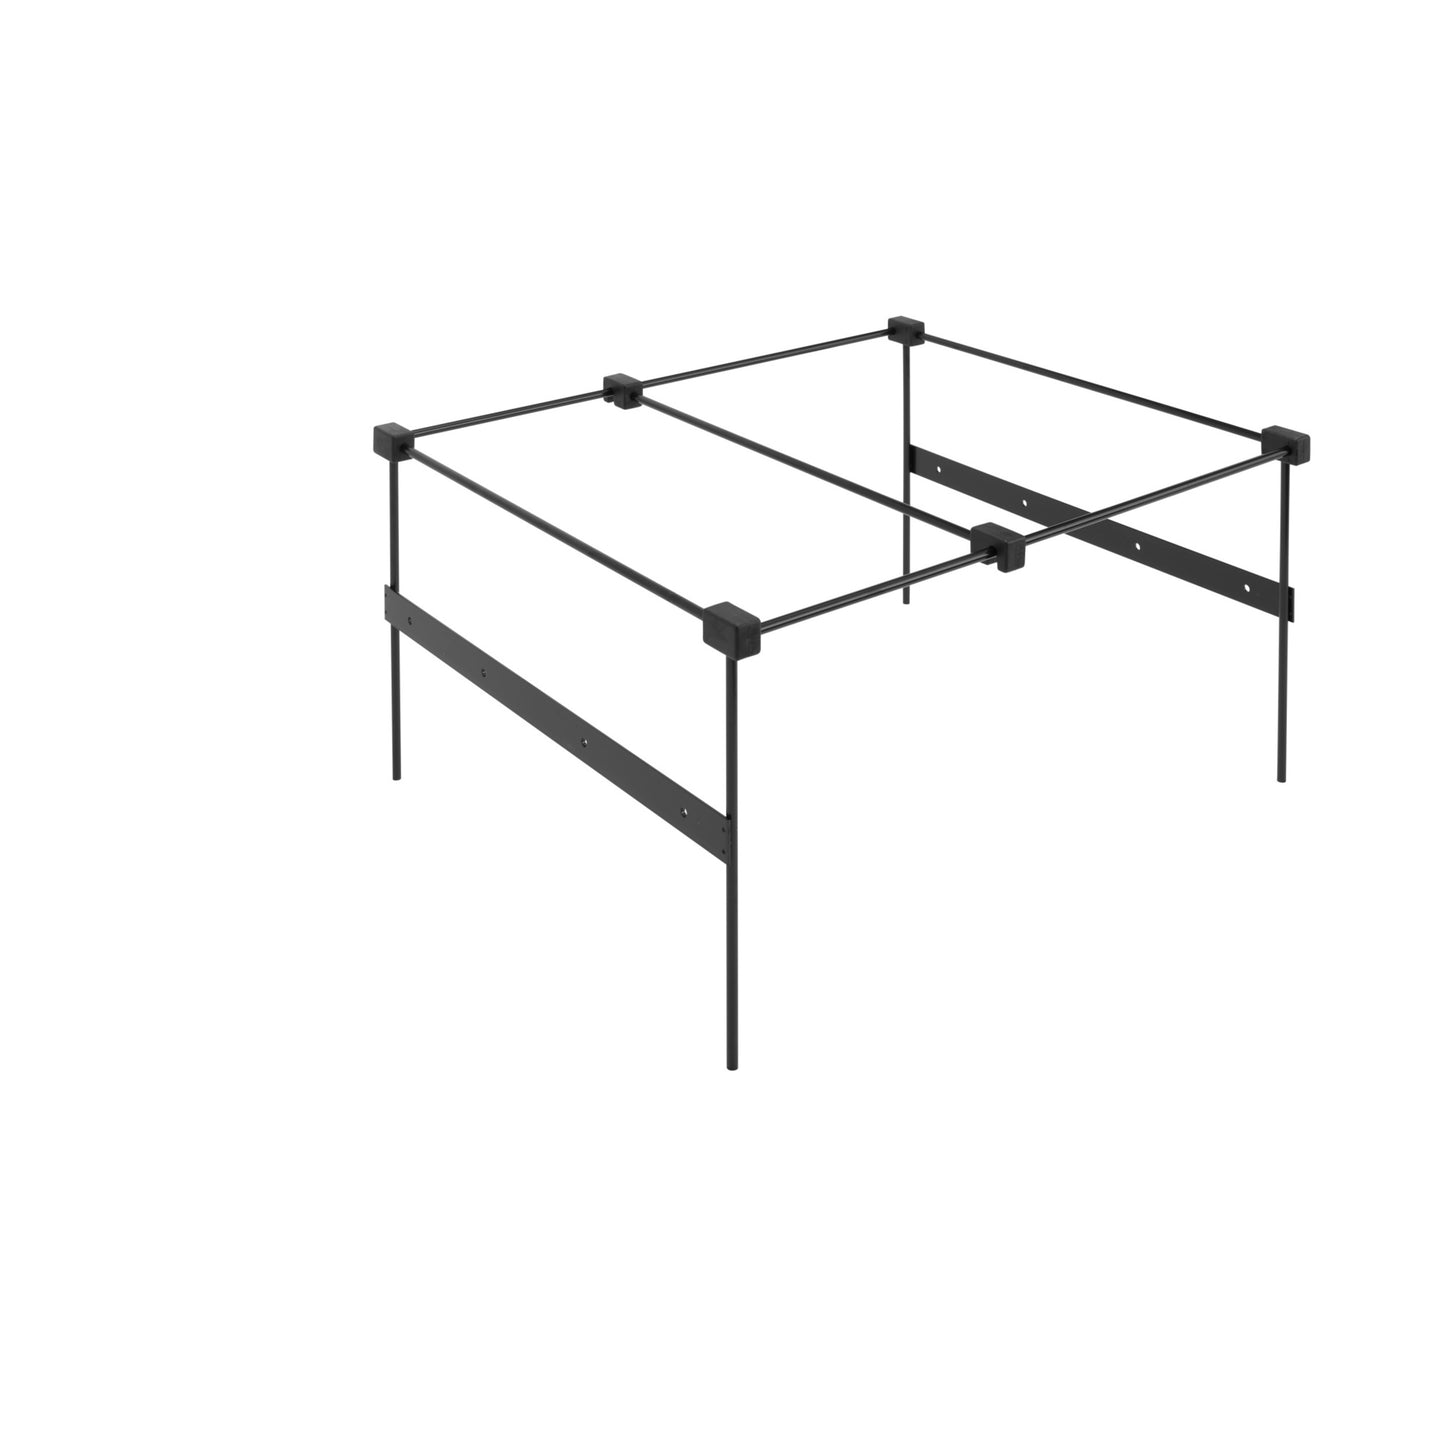 Rev-A-Shelf / RAS-LGFD-52 / File Drawer Kit for Kitchen/Office Cabinet Organization